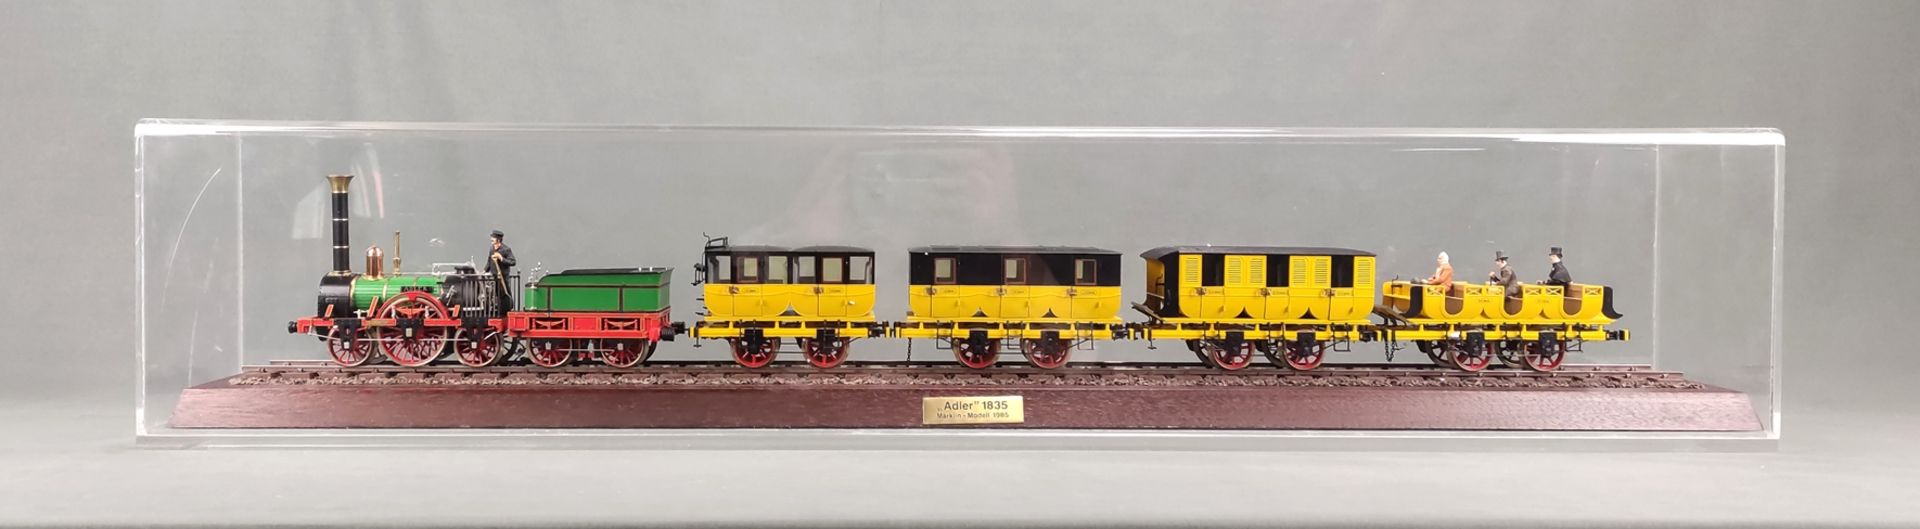 Märklin Spur 1, 5750 train set "Adler", with locomotive, 4 different passenger wagons and 1 set of 